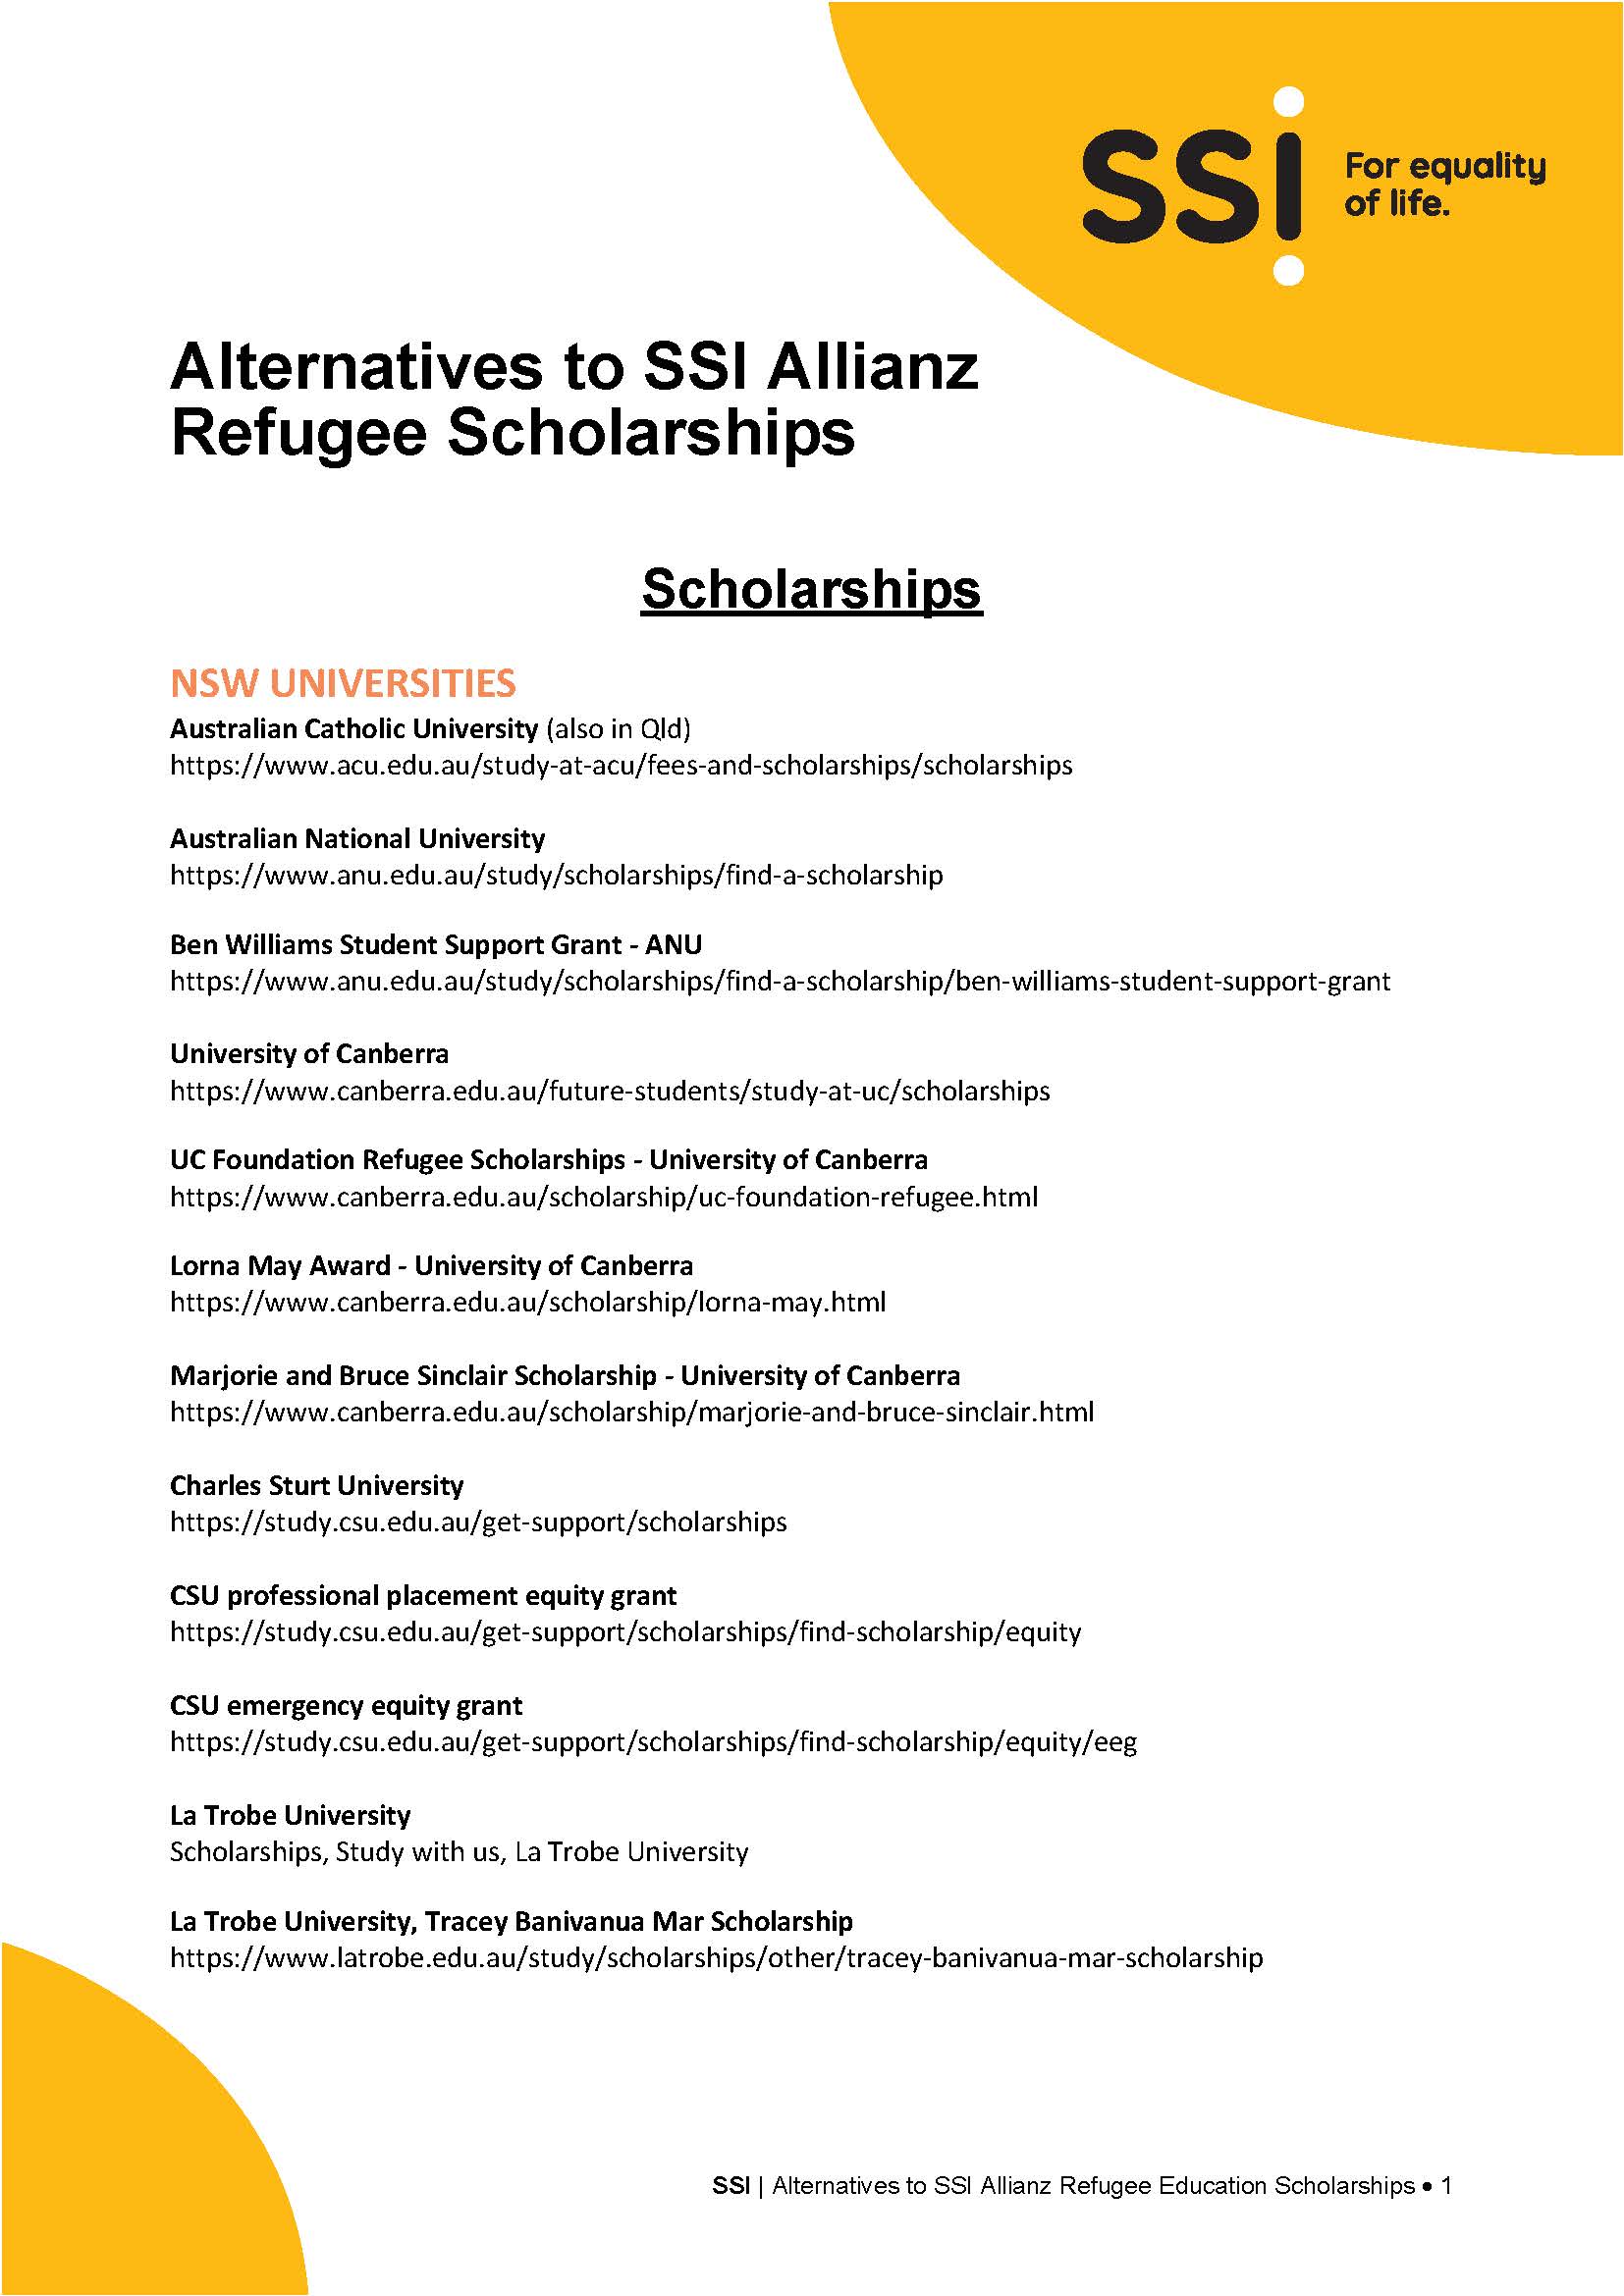 Alternatives to SSI Allianz Refugee Education Scholarships